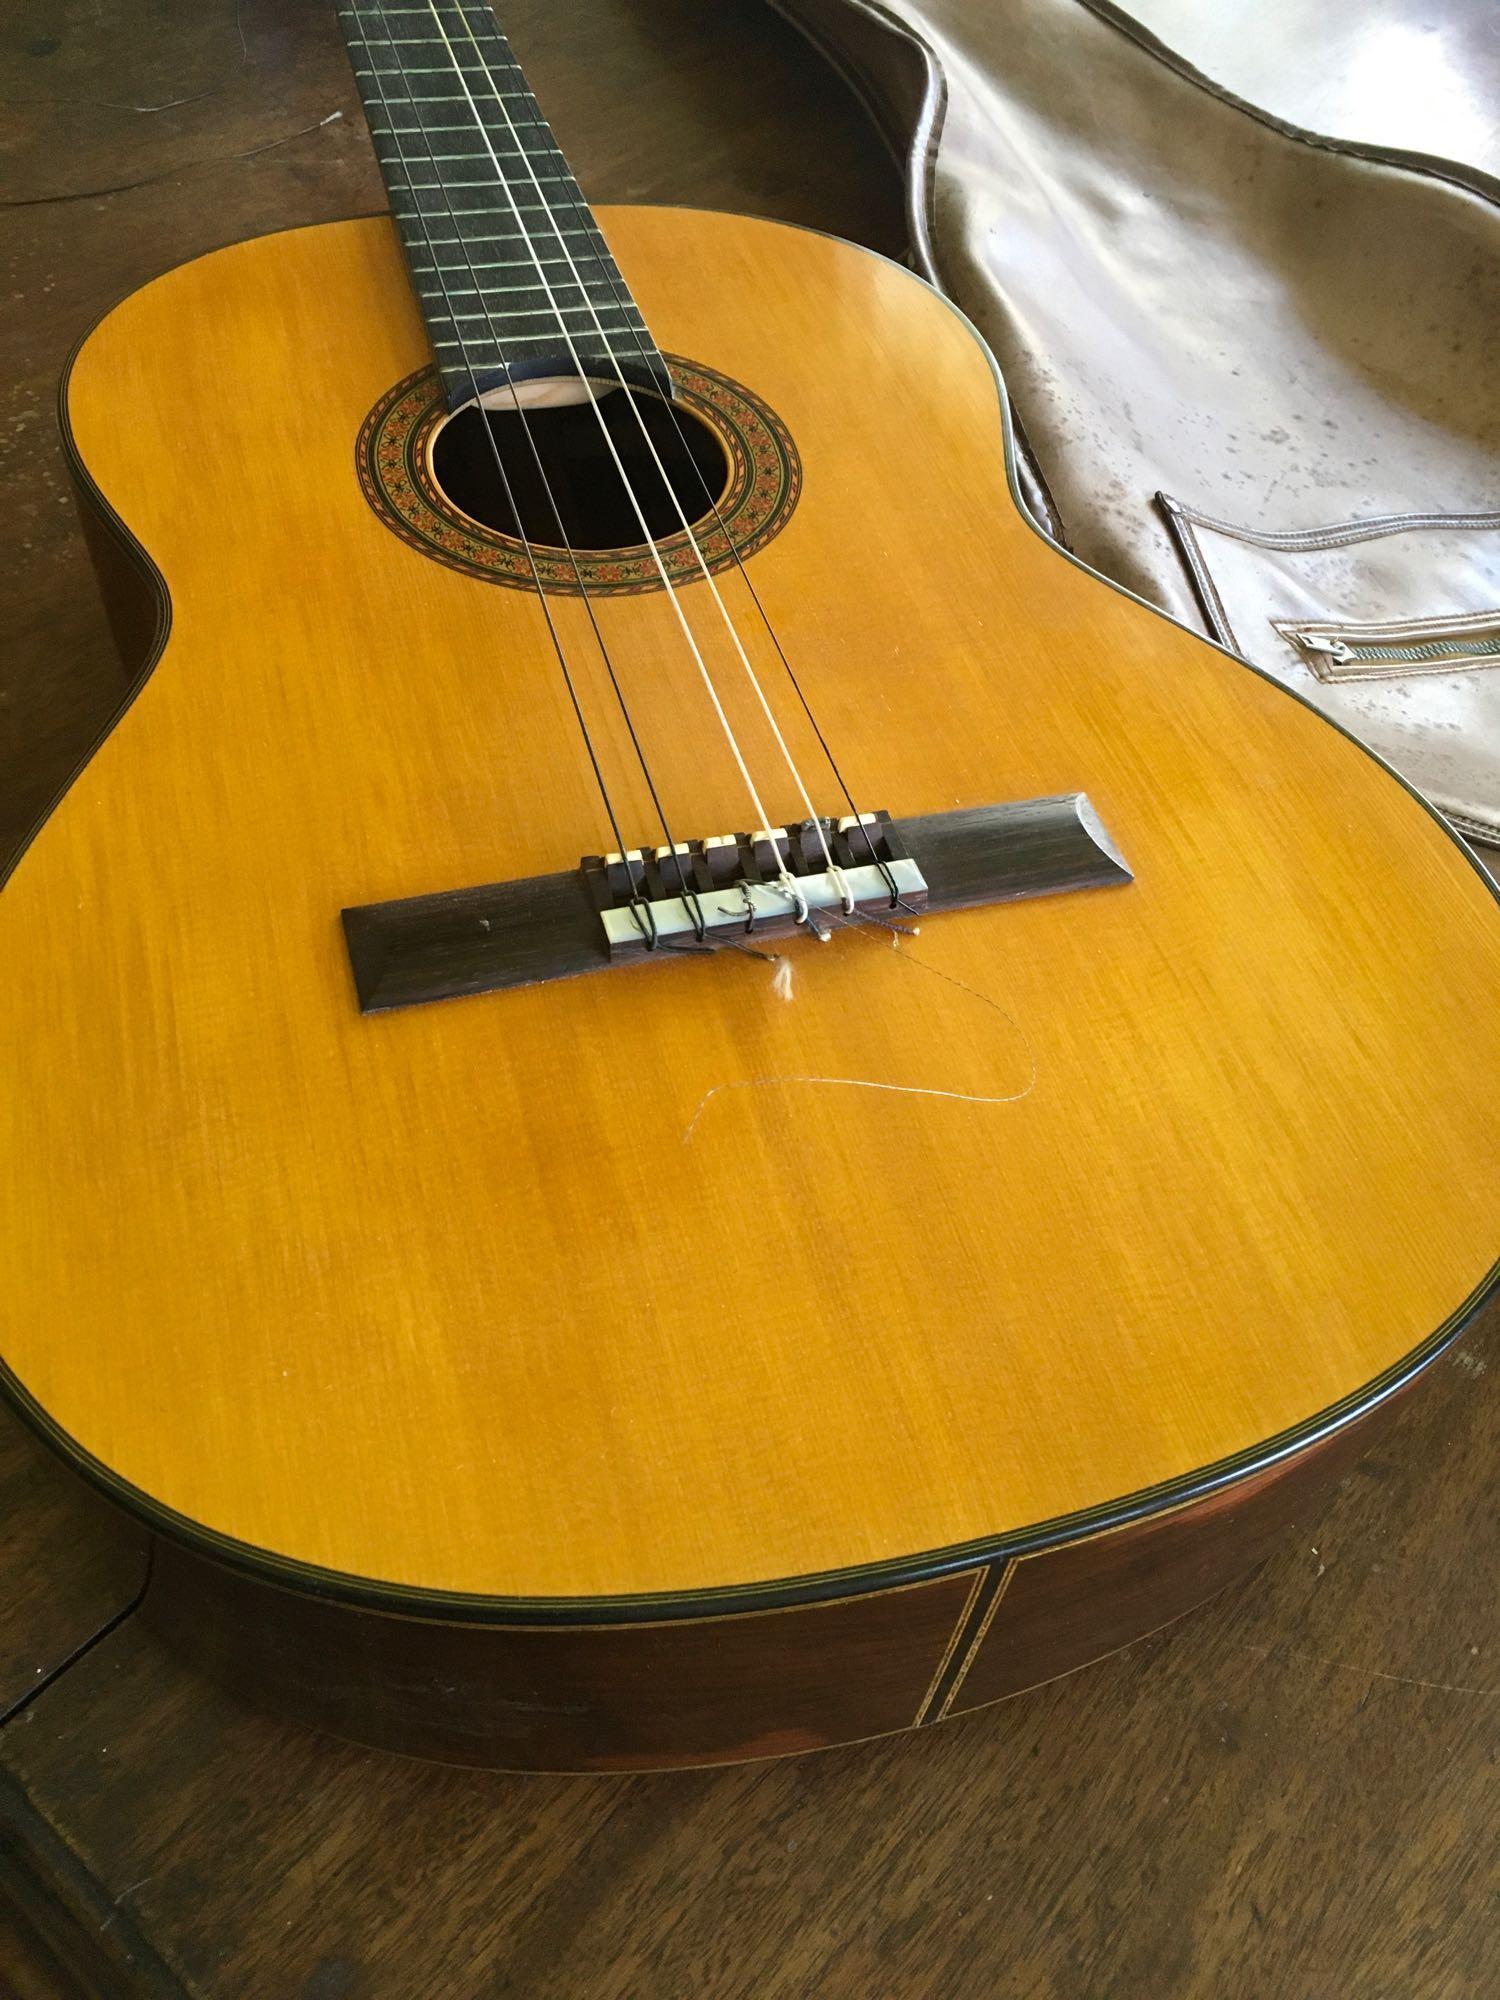 Vintage Manuel Rodriguez Luthier, signed #260 Acoustic guitar with soft case & 3 musical books